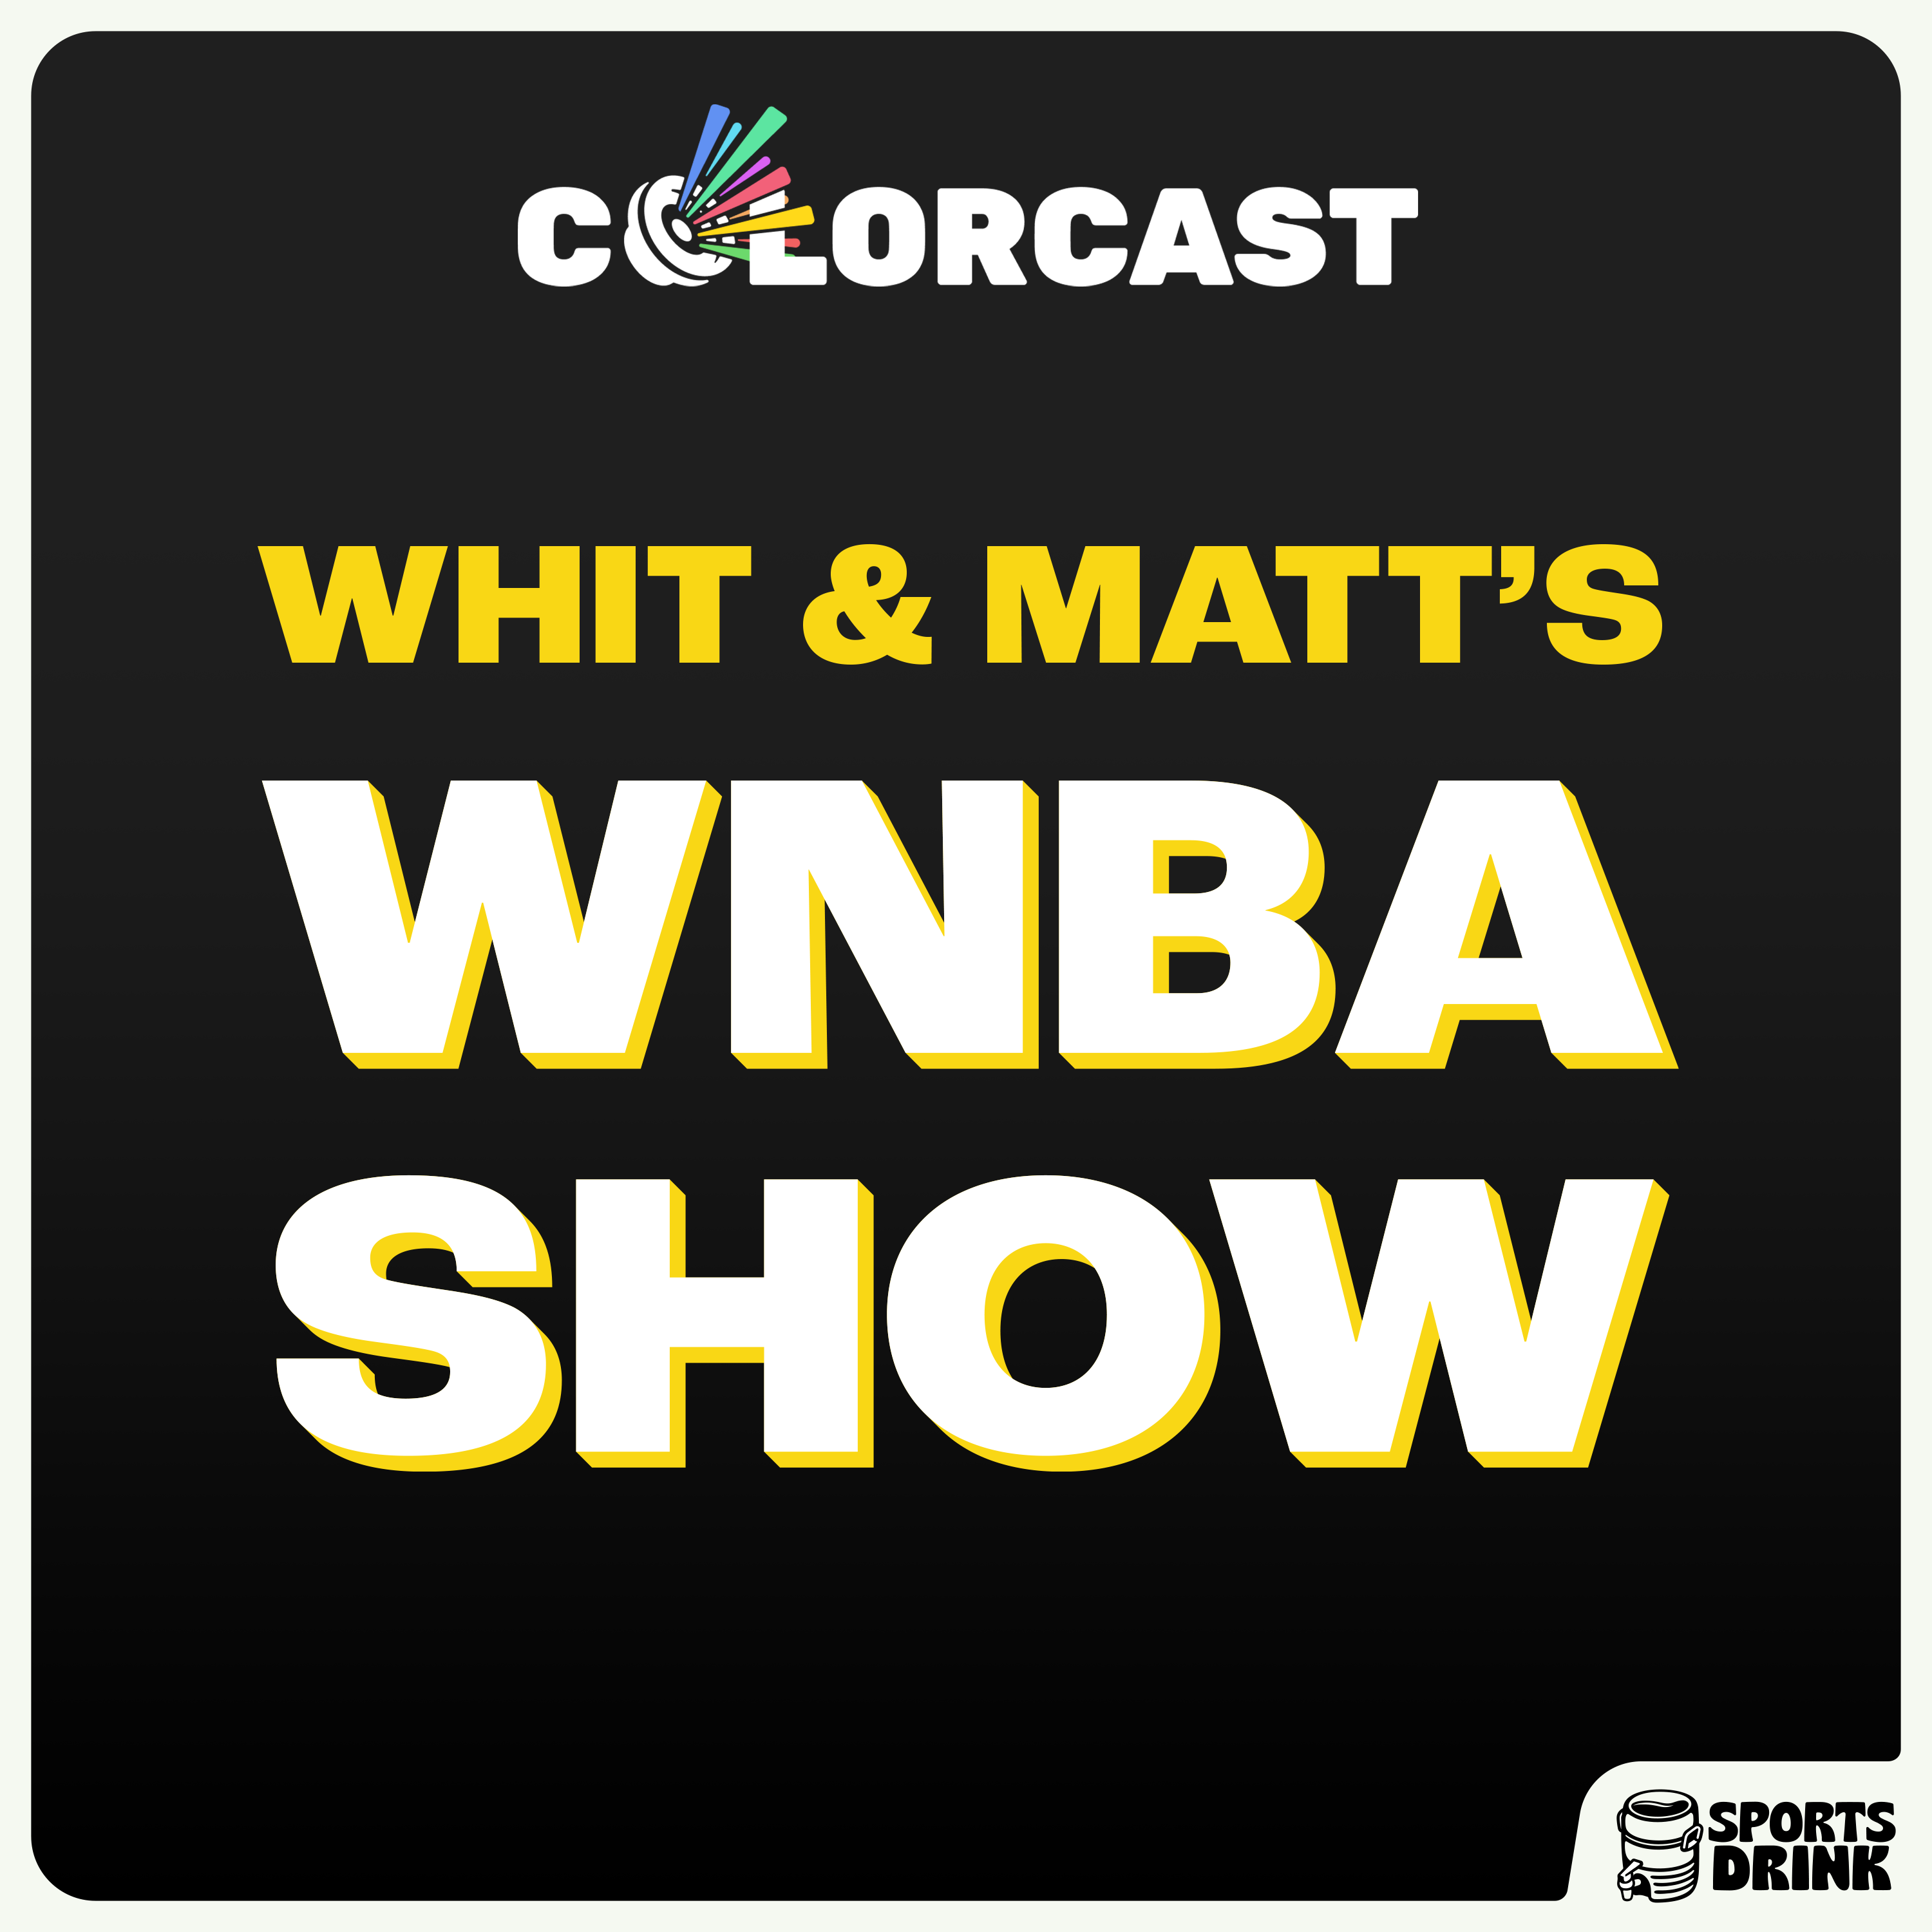 Whit & Matt’s WNBA Show